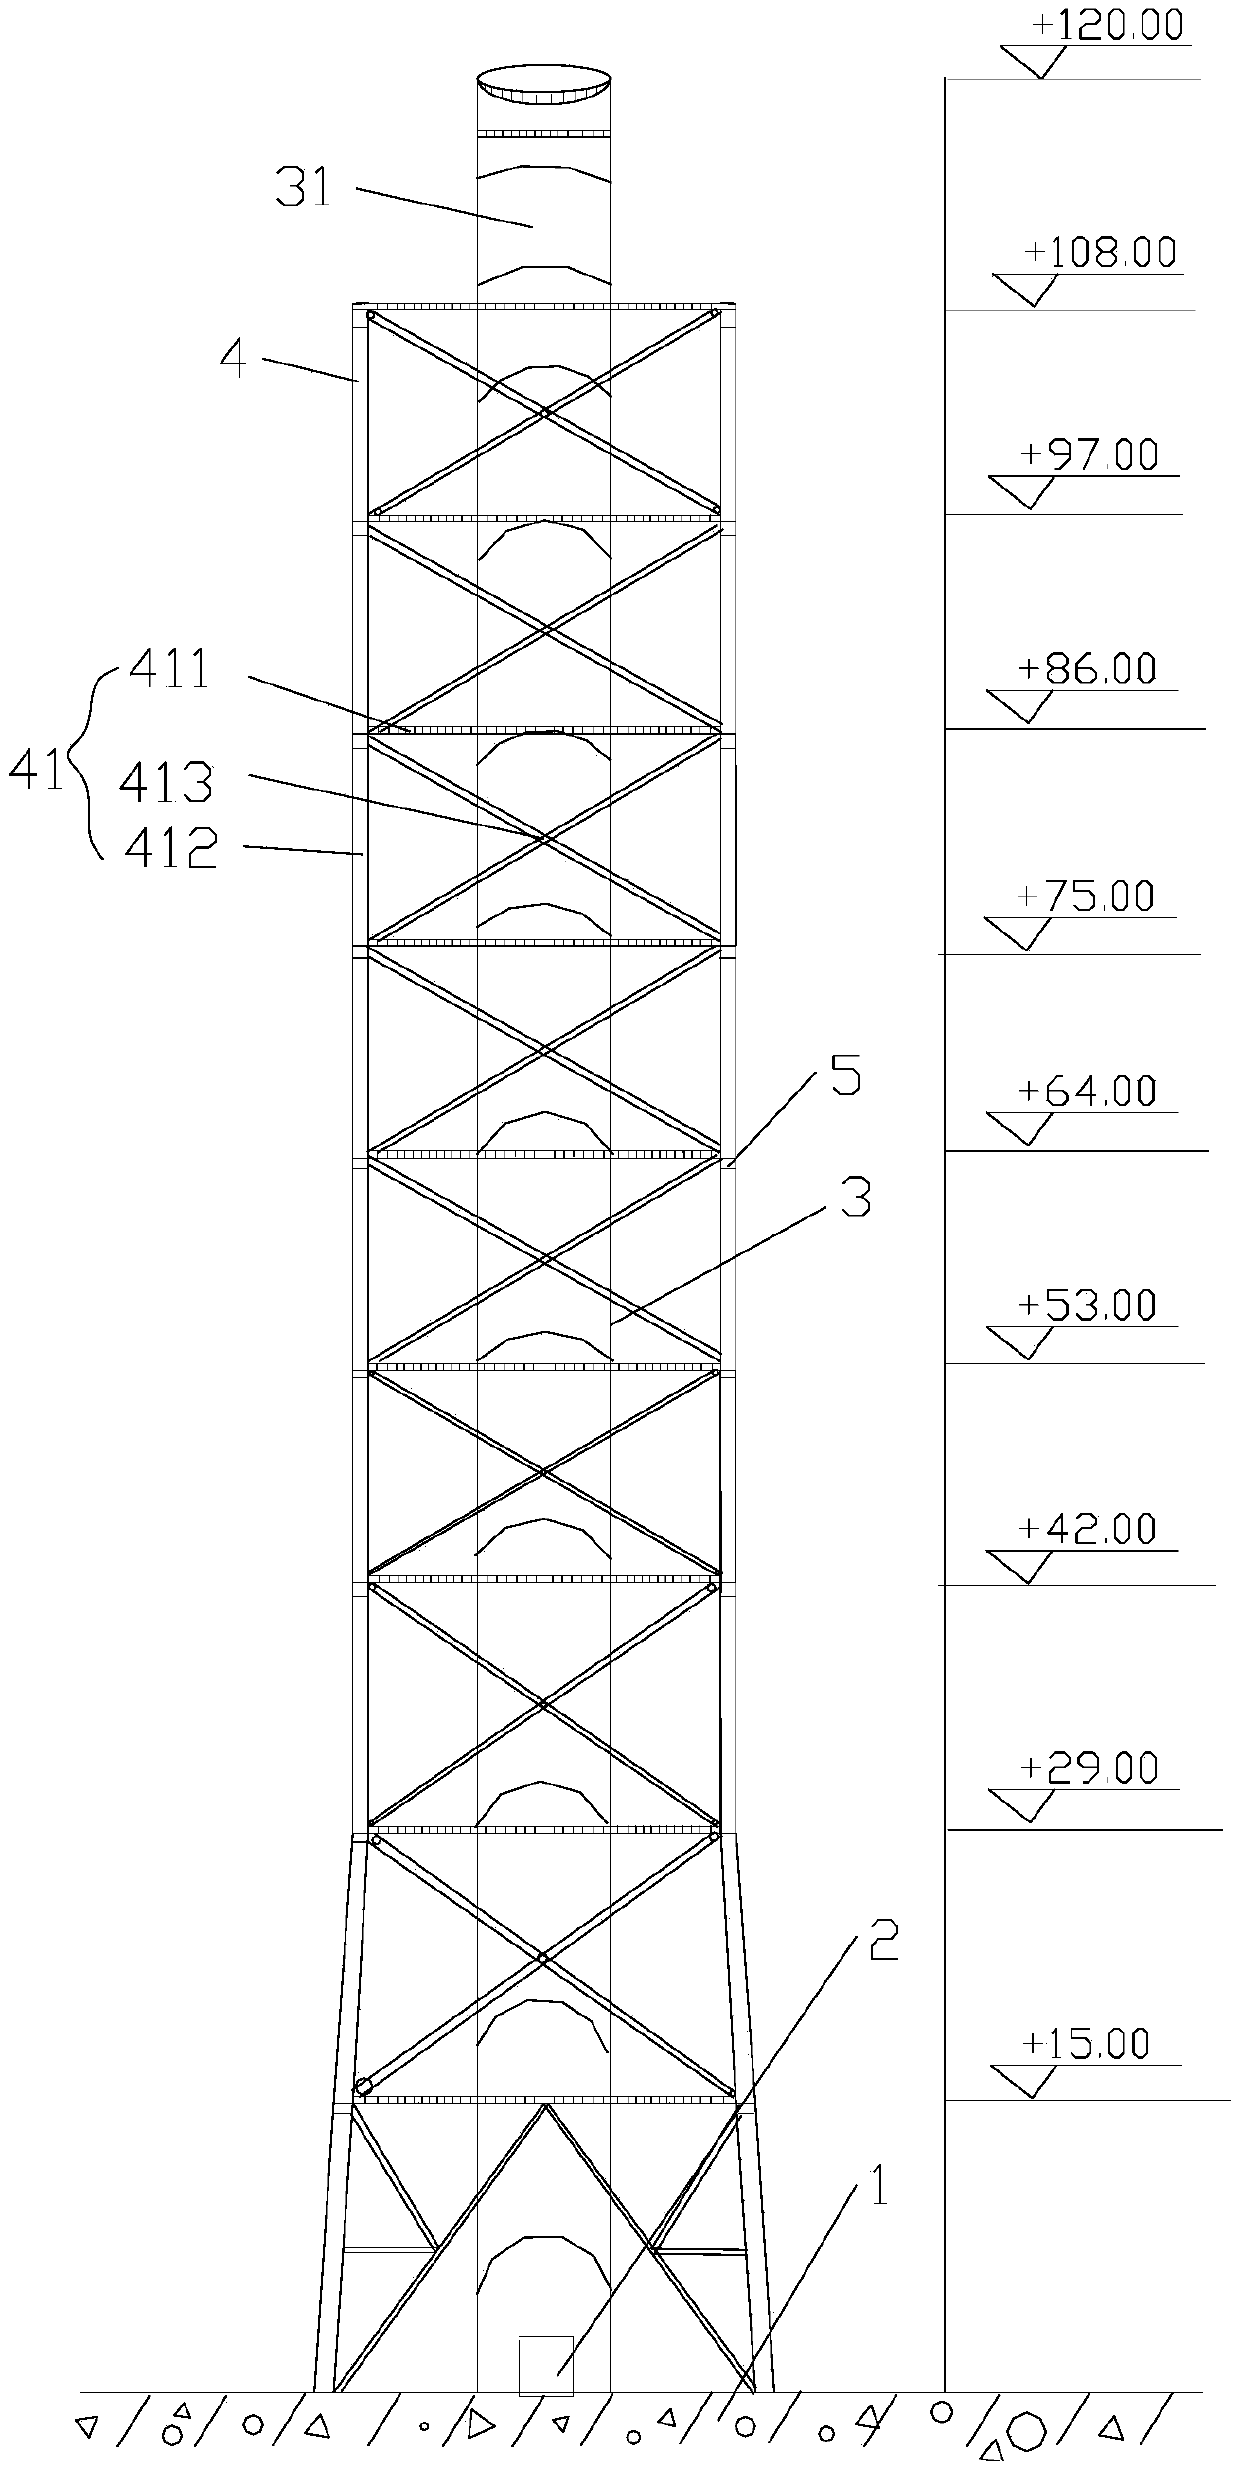 Method for remoVing steel chimney